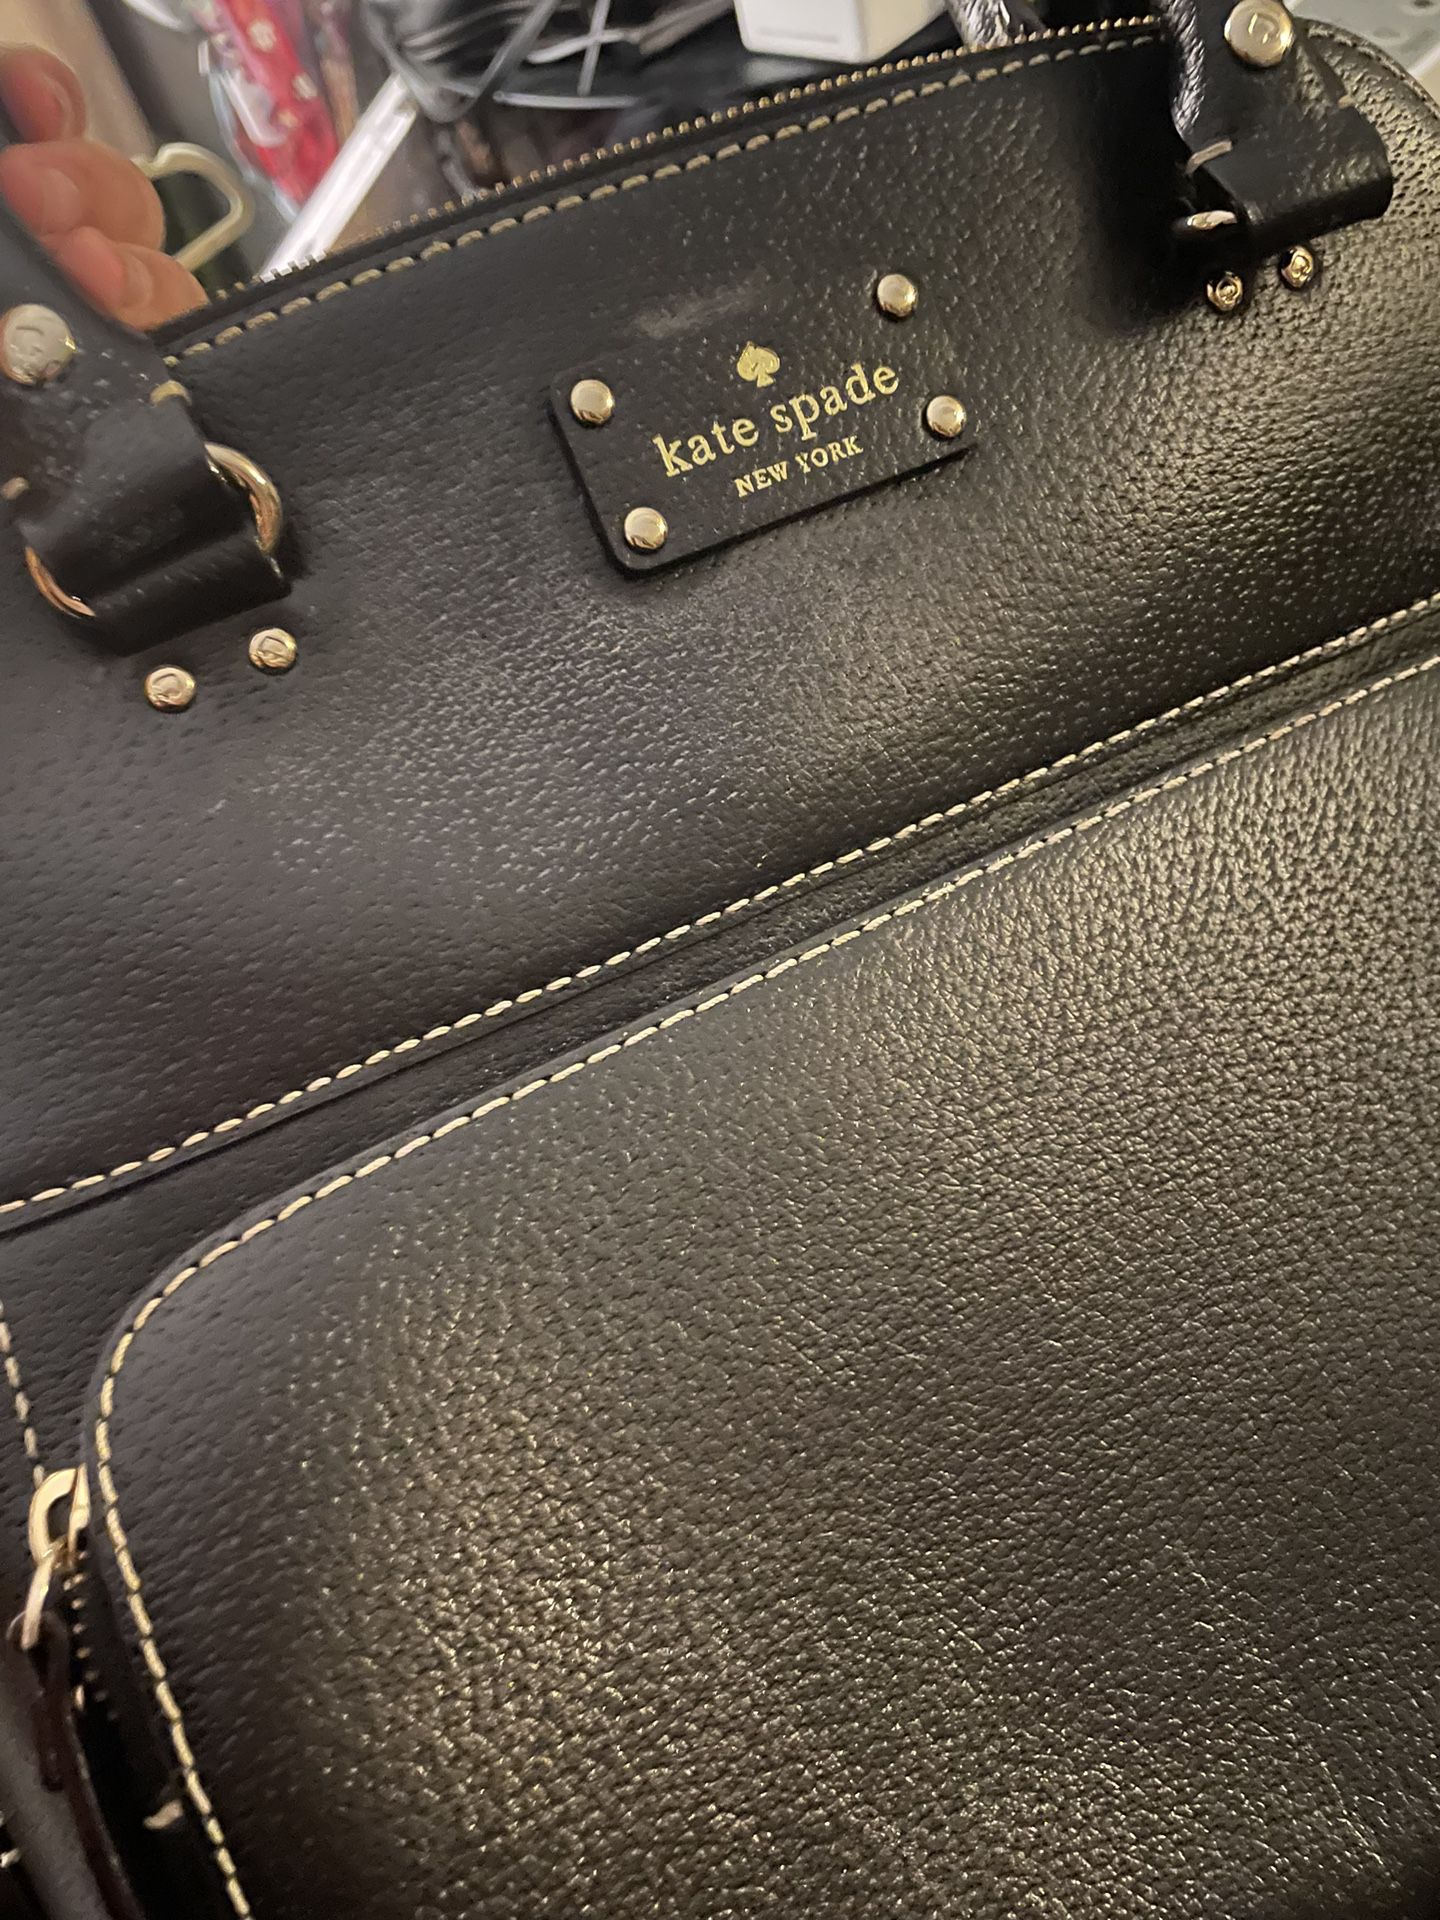 Black Vintage Kate Spade Bag for Sale in Irwindale, CA - OfferUp